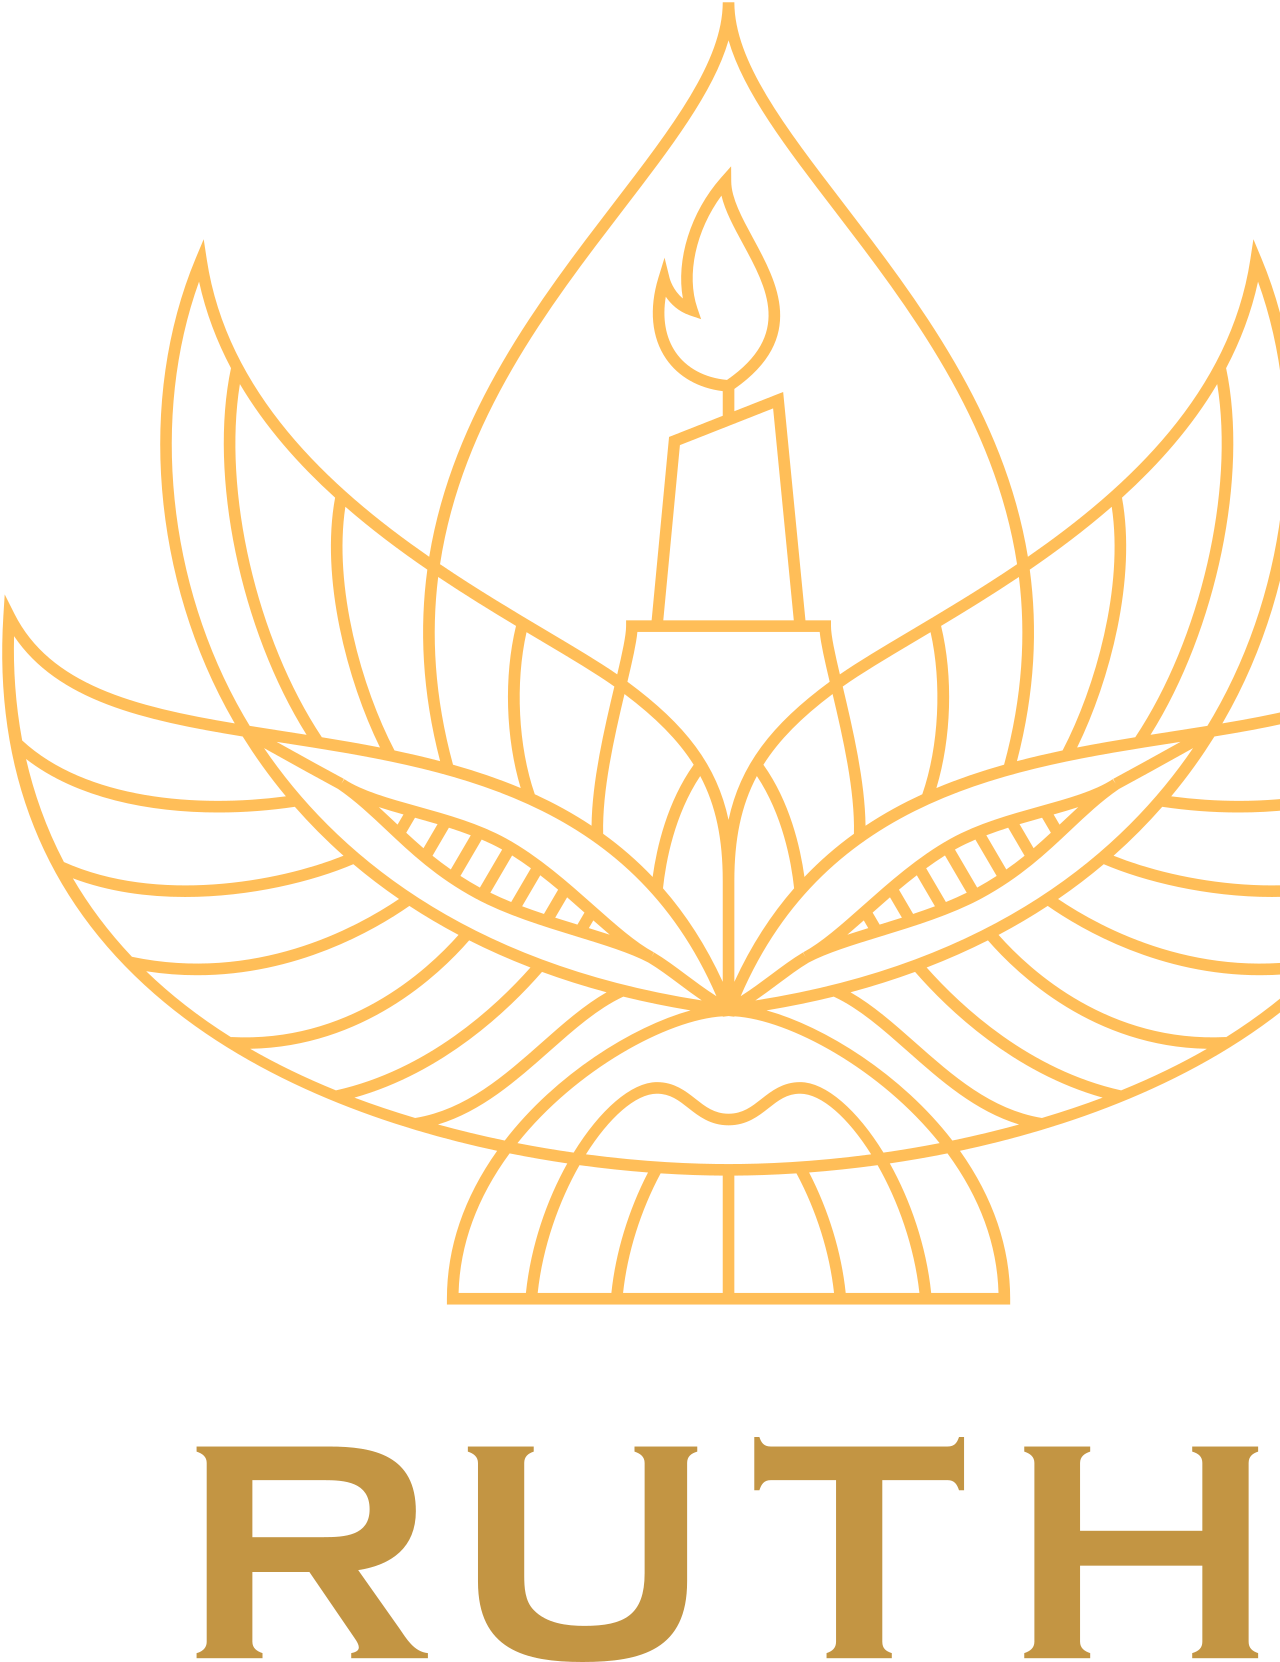 RUTH's logo